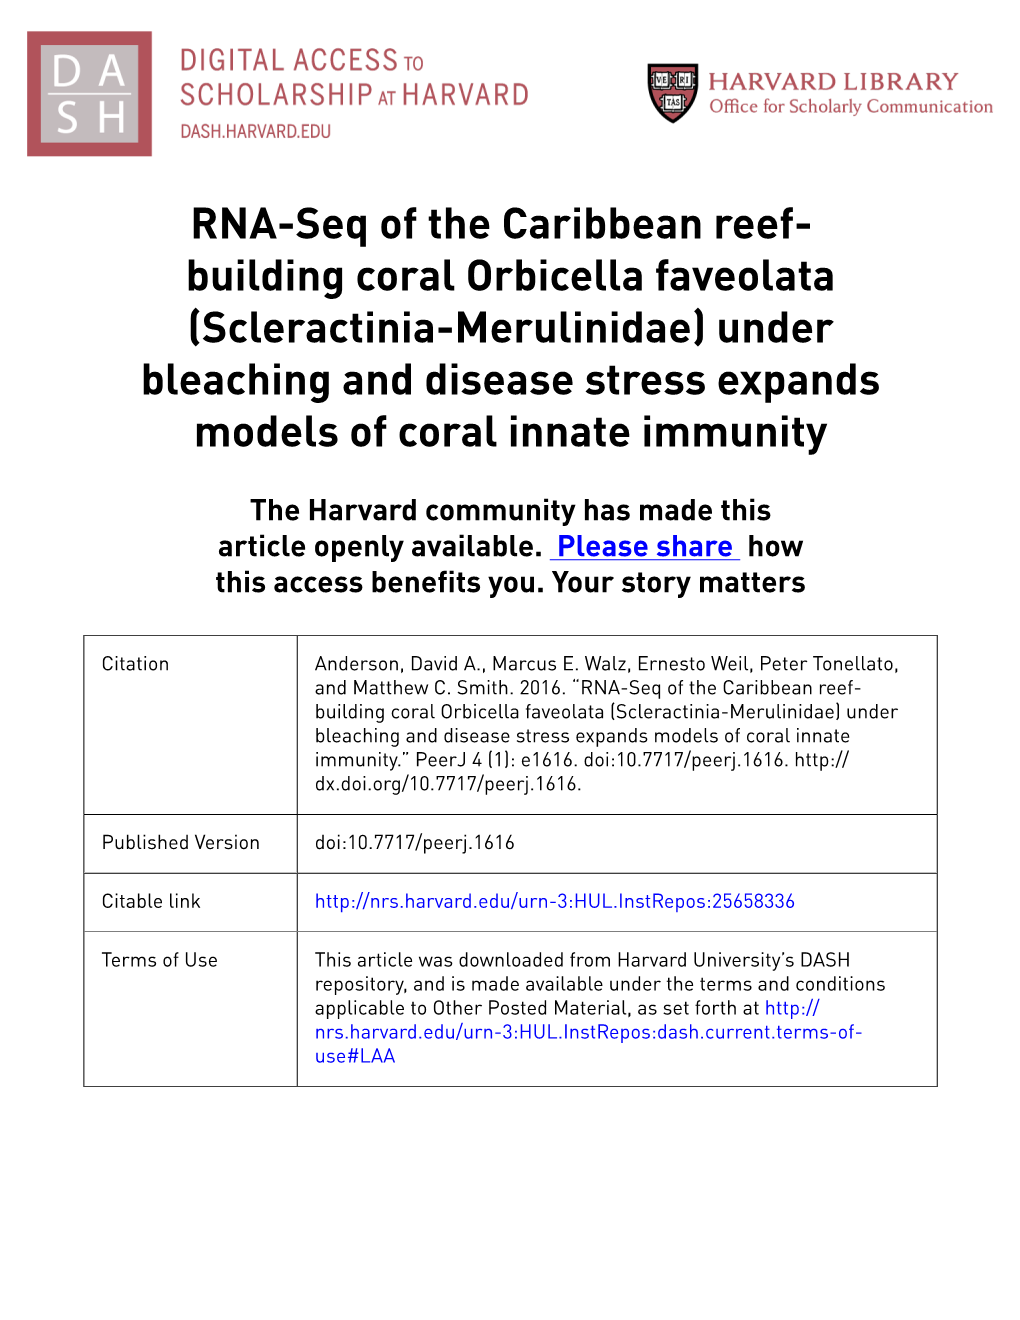 RNA-Seq of the Caribbean Reef-Building Coral Orbicella Faveolata